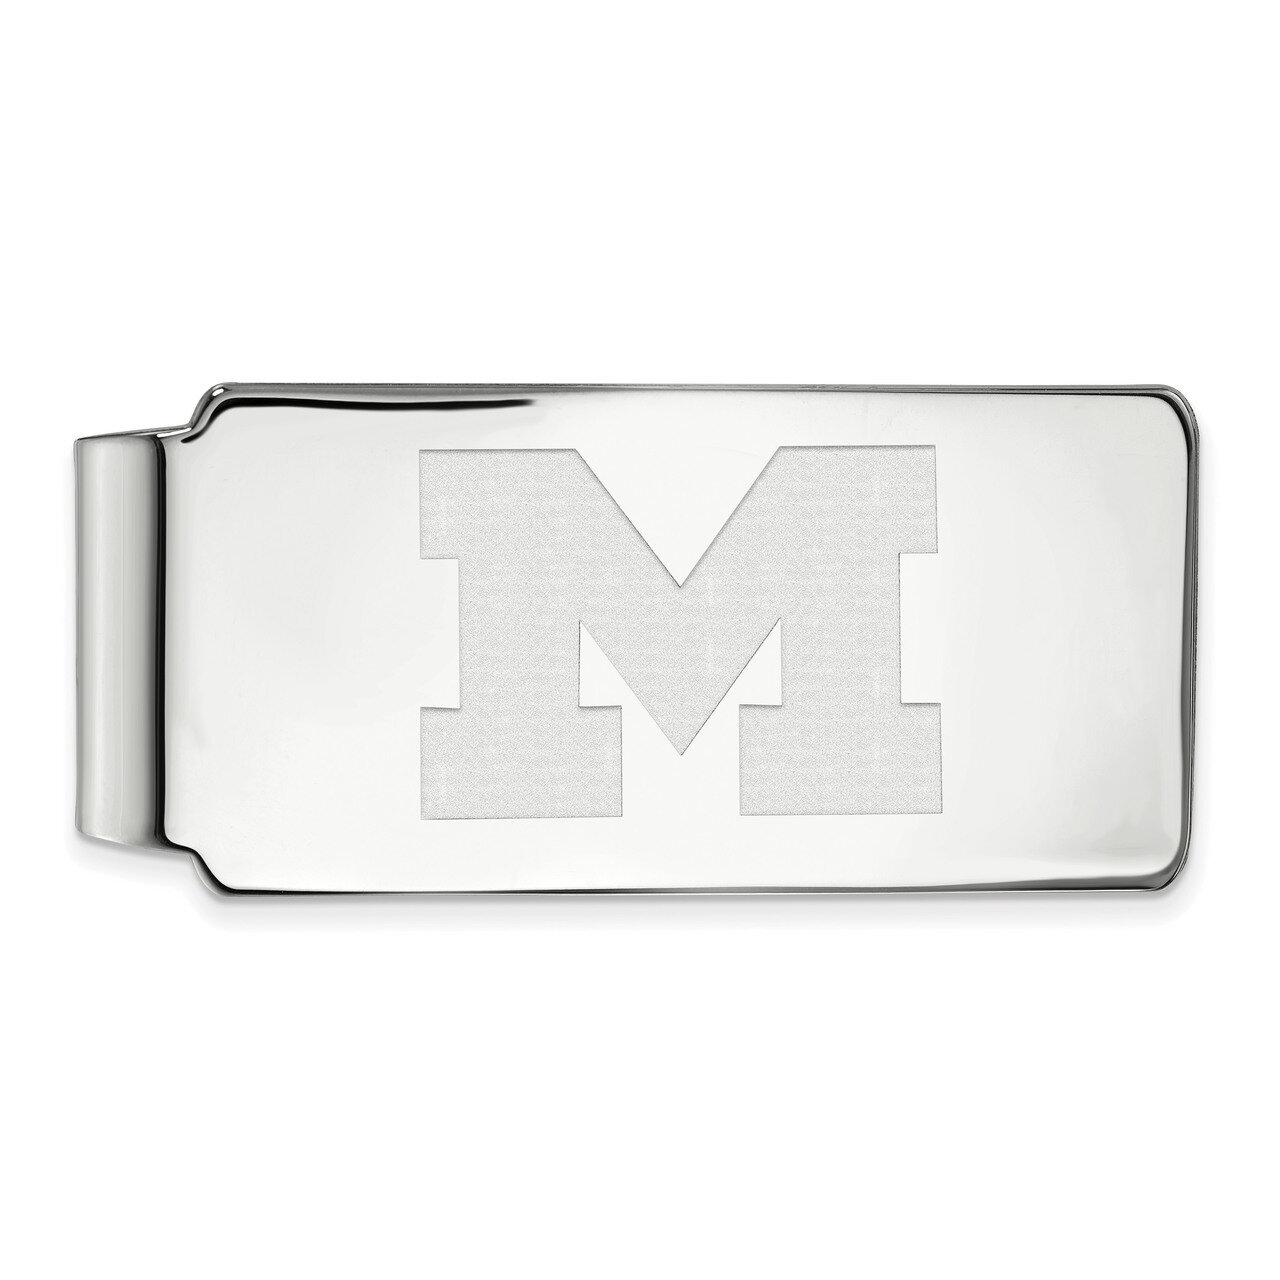 Michigan University of Money Clip Sterling Silver SS024UM